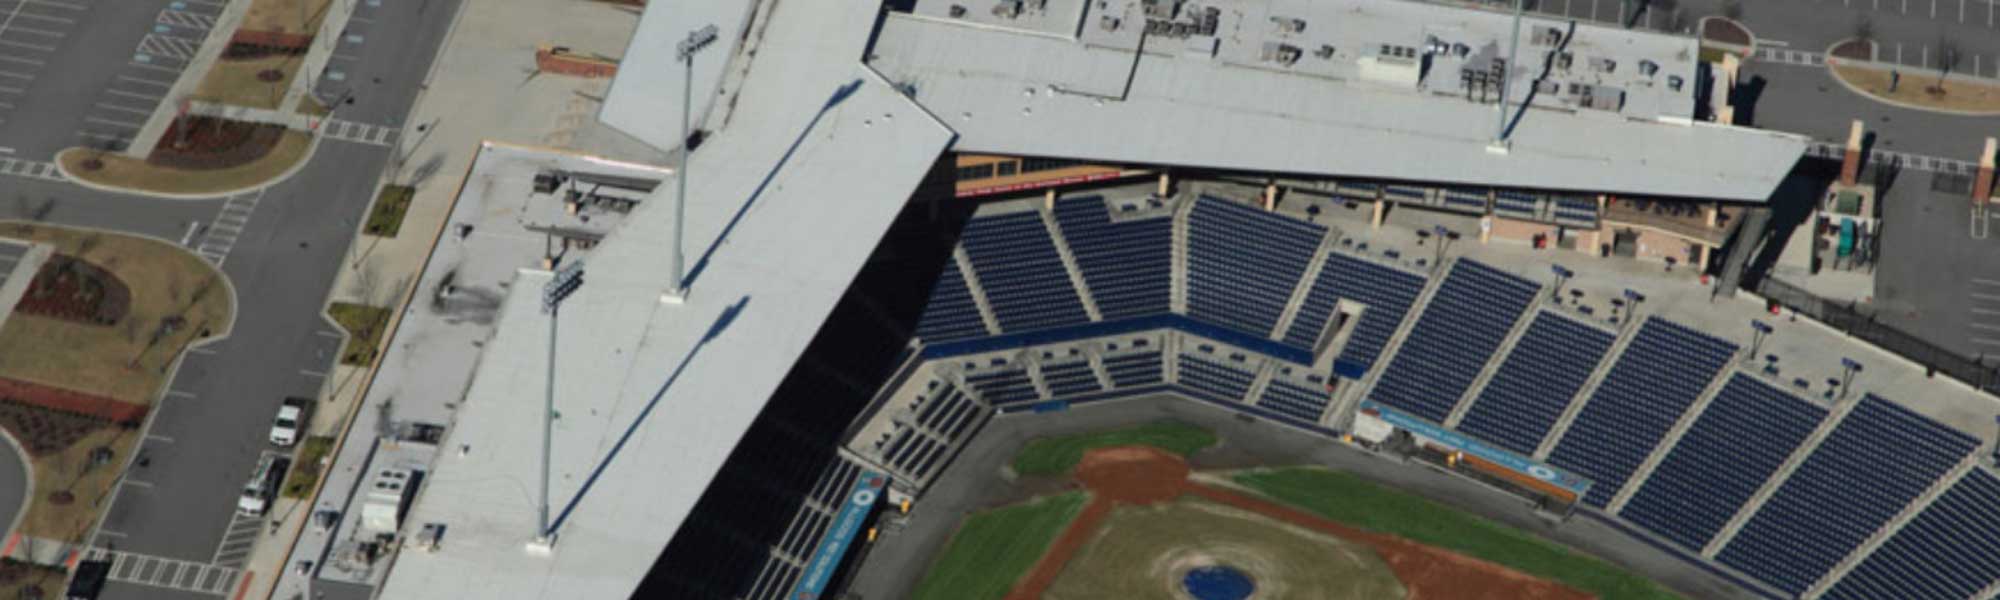 Baseball Field Roof